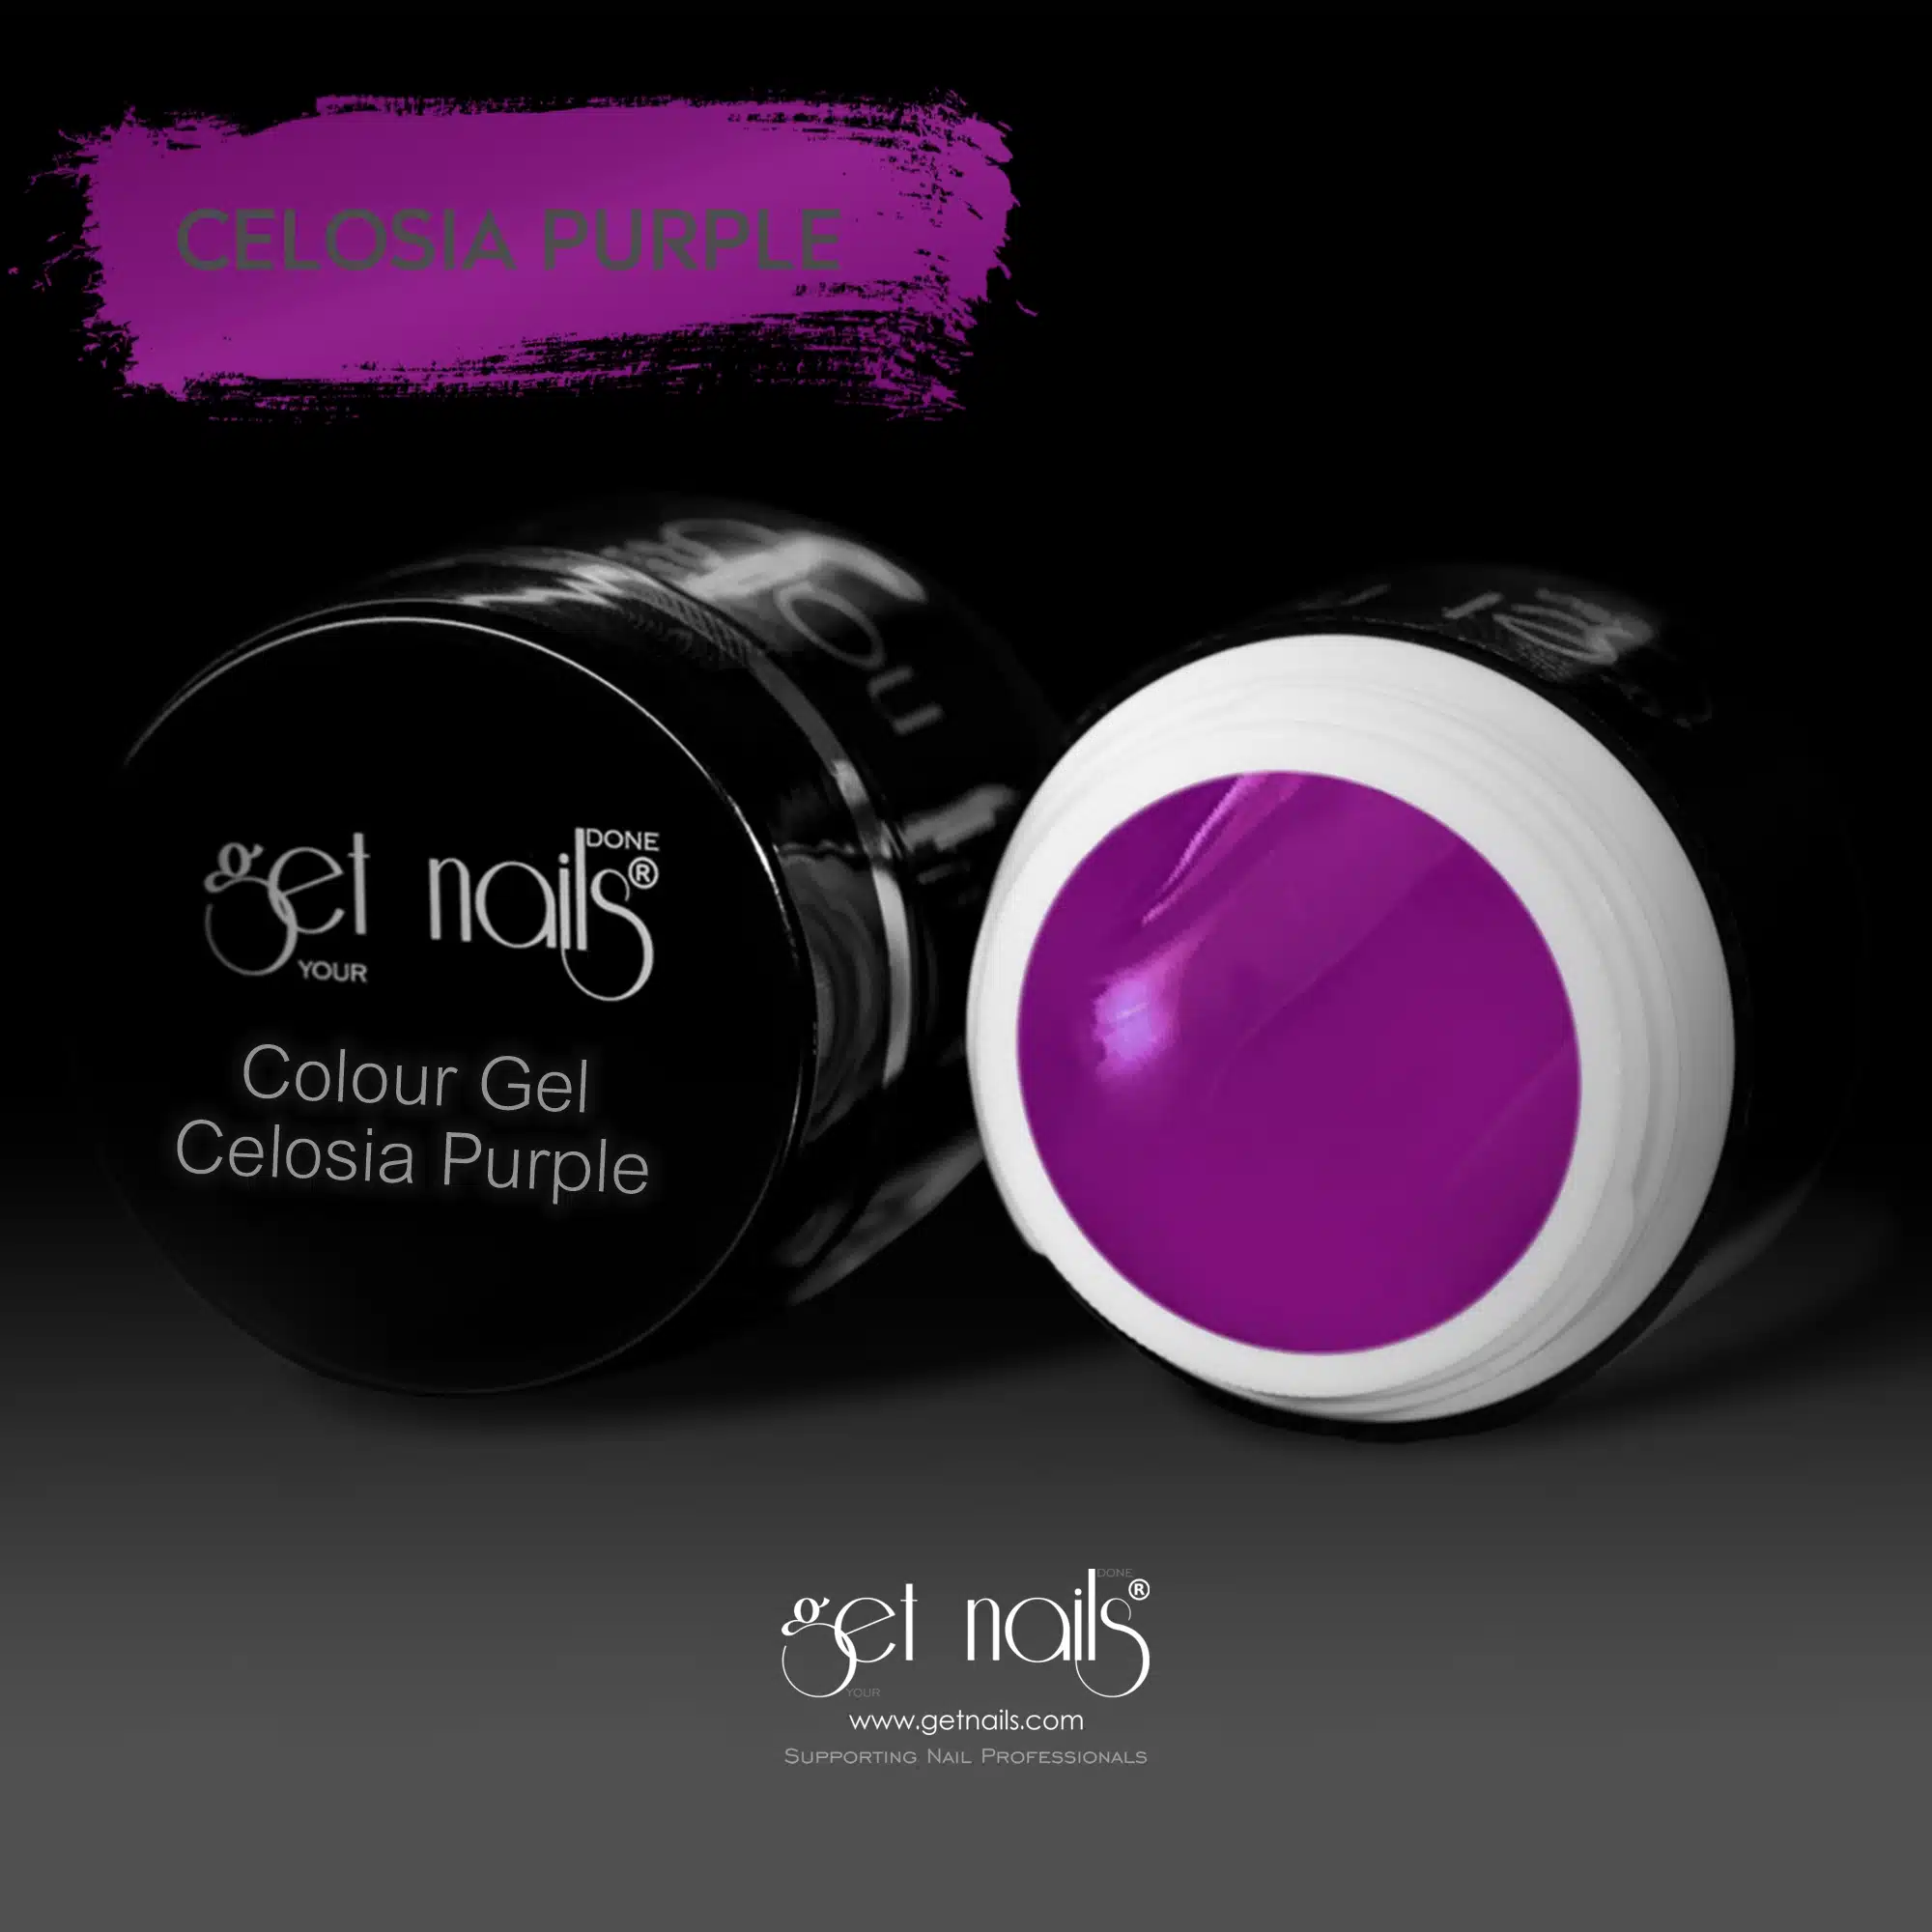 Get Nails Austria - Цветной гель Celosia Purple 5g